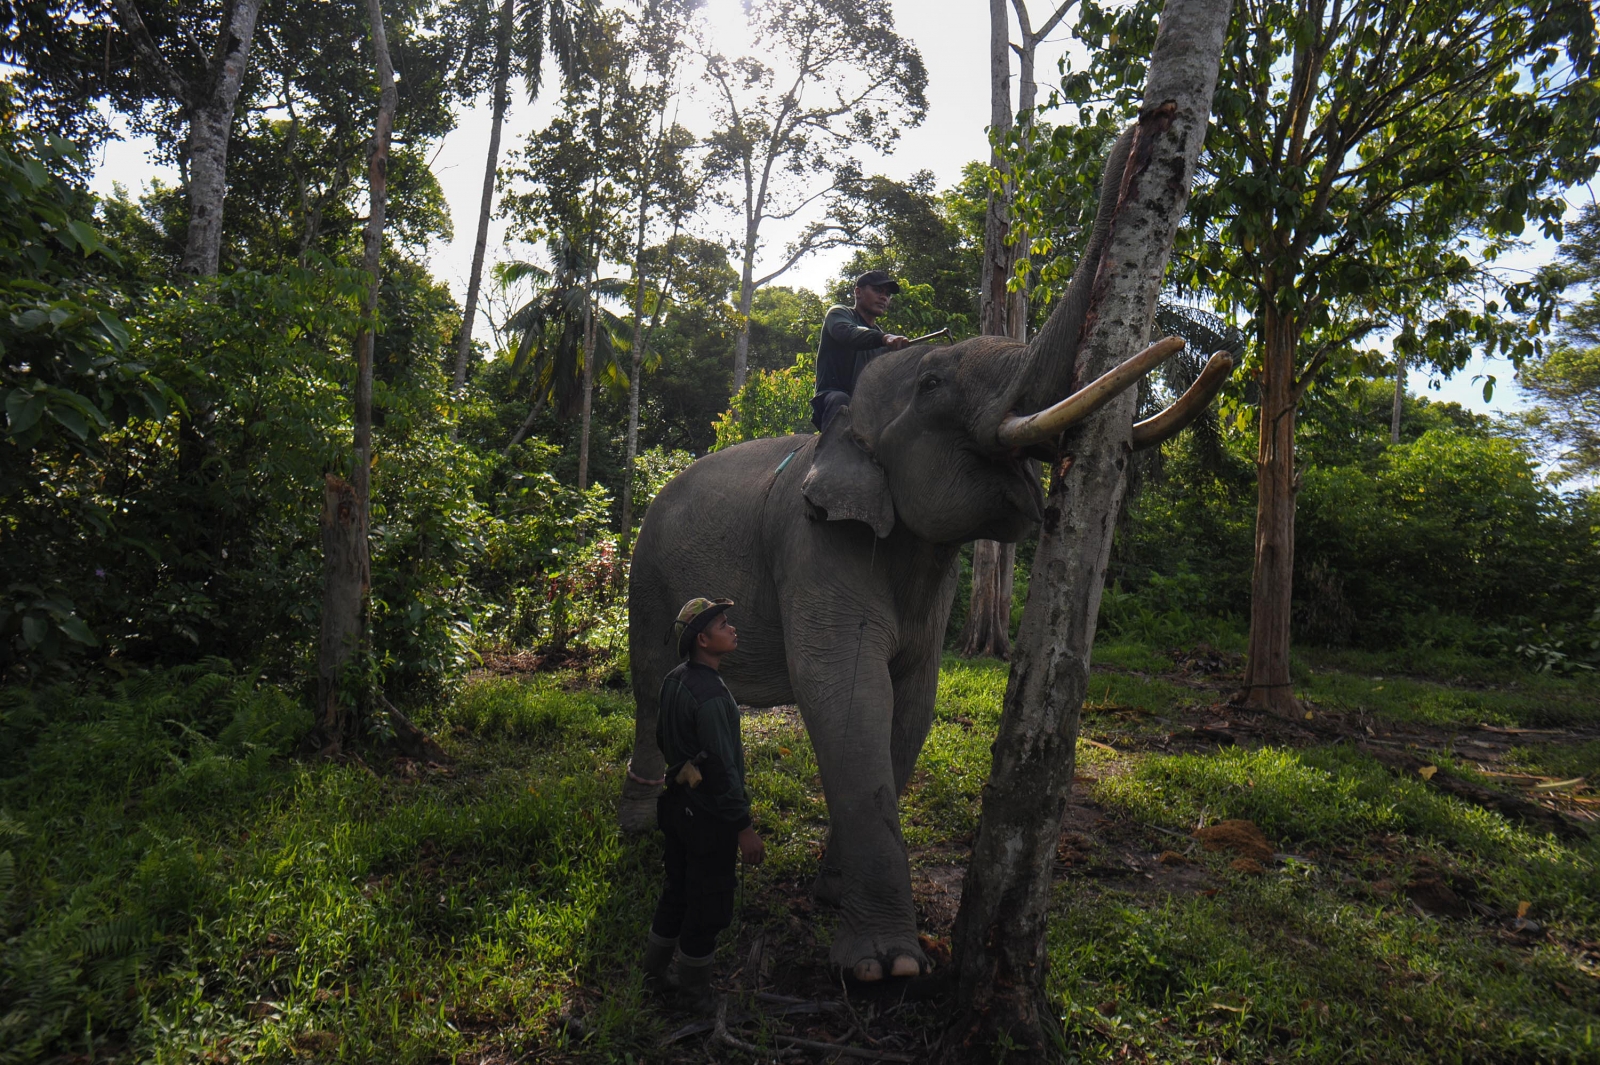 Elephant rubs against tree